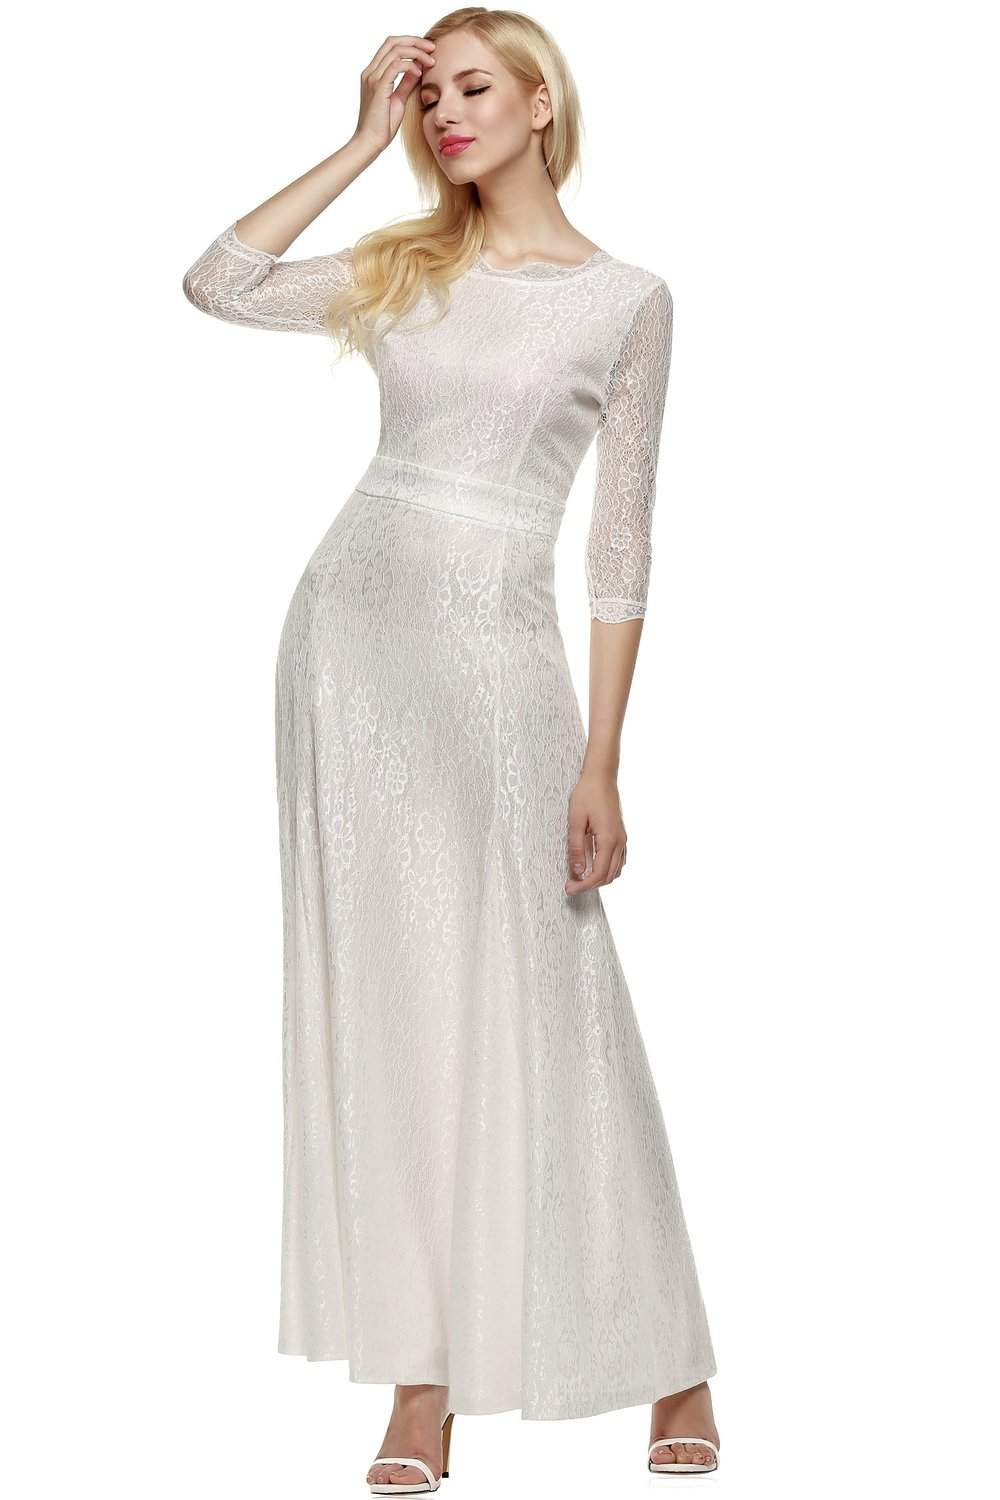 Inexpensive Wedding Gowns
 Top 50 Best Cheap Wedding Dresses